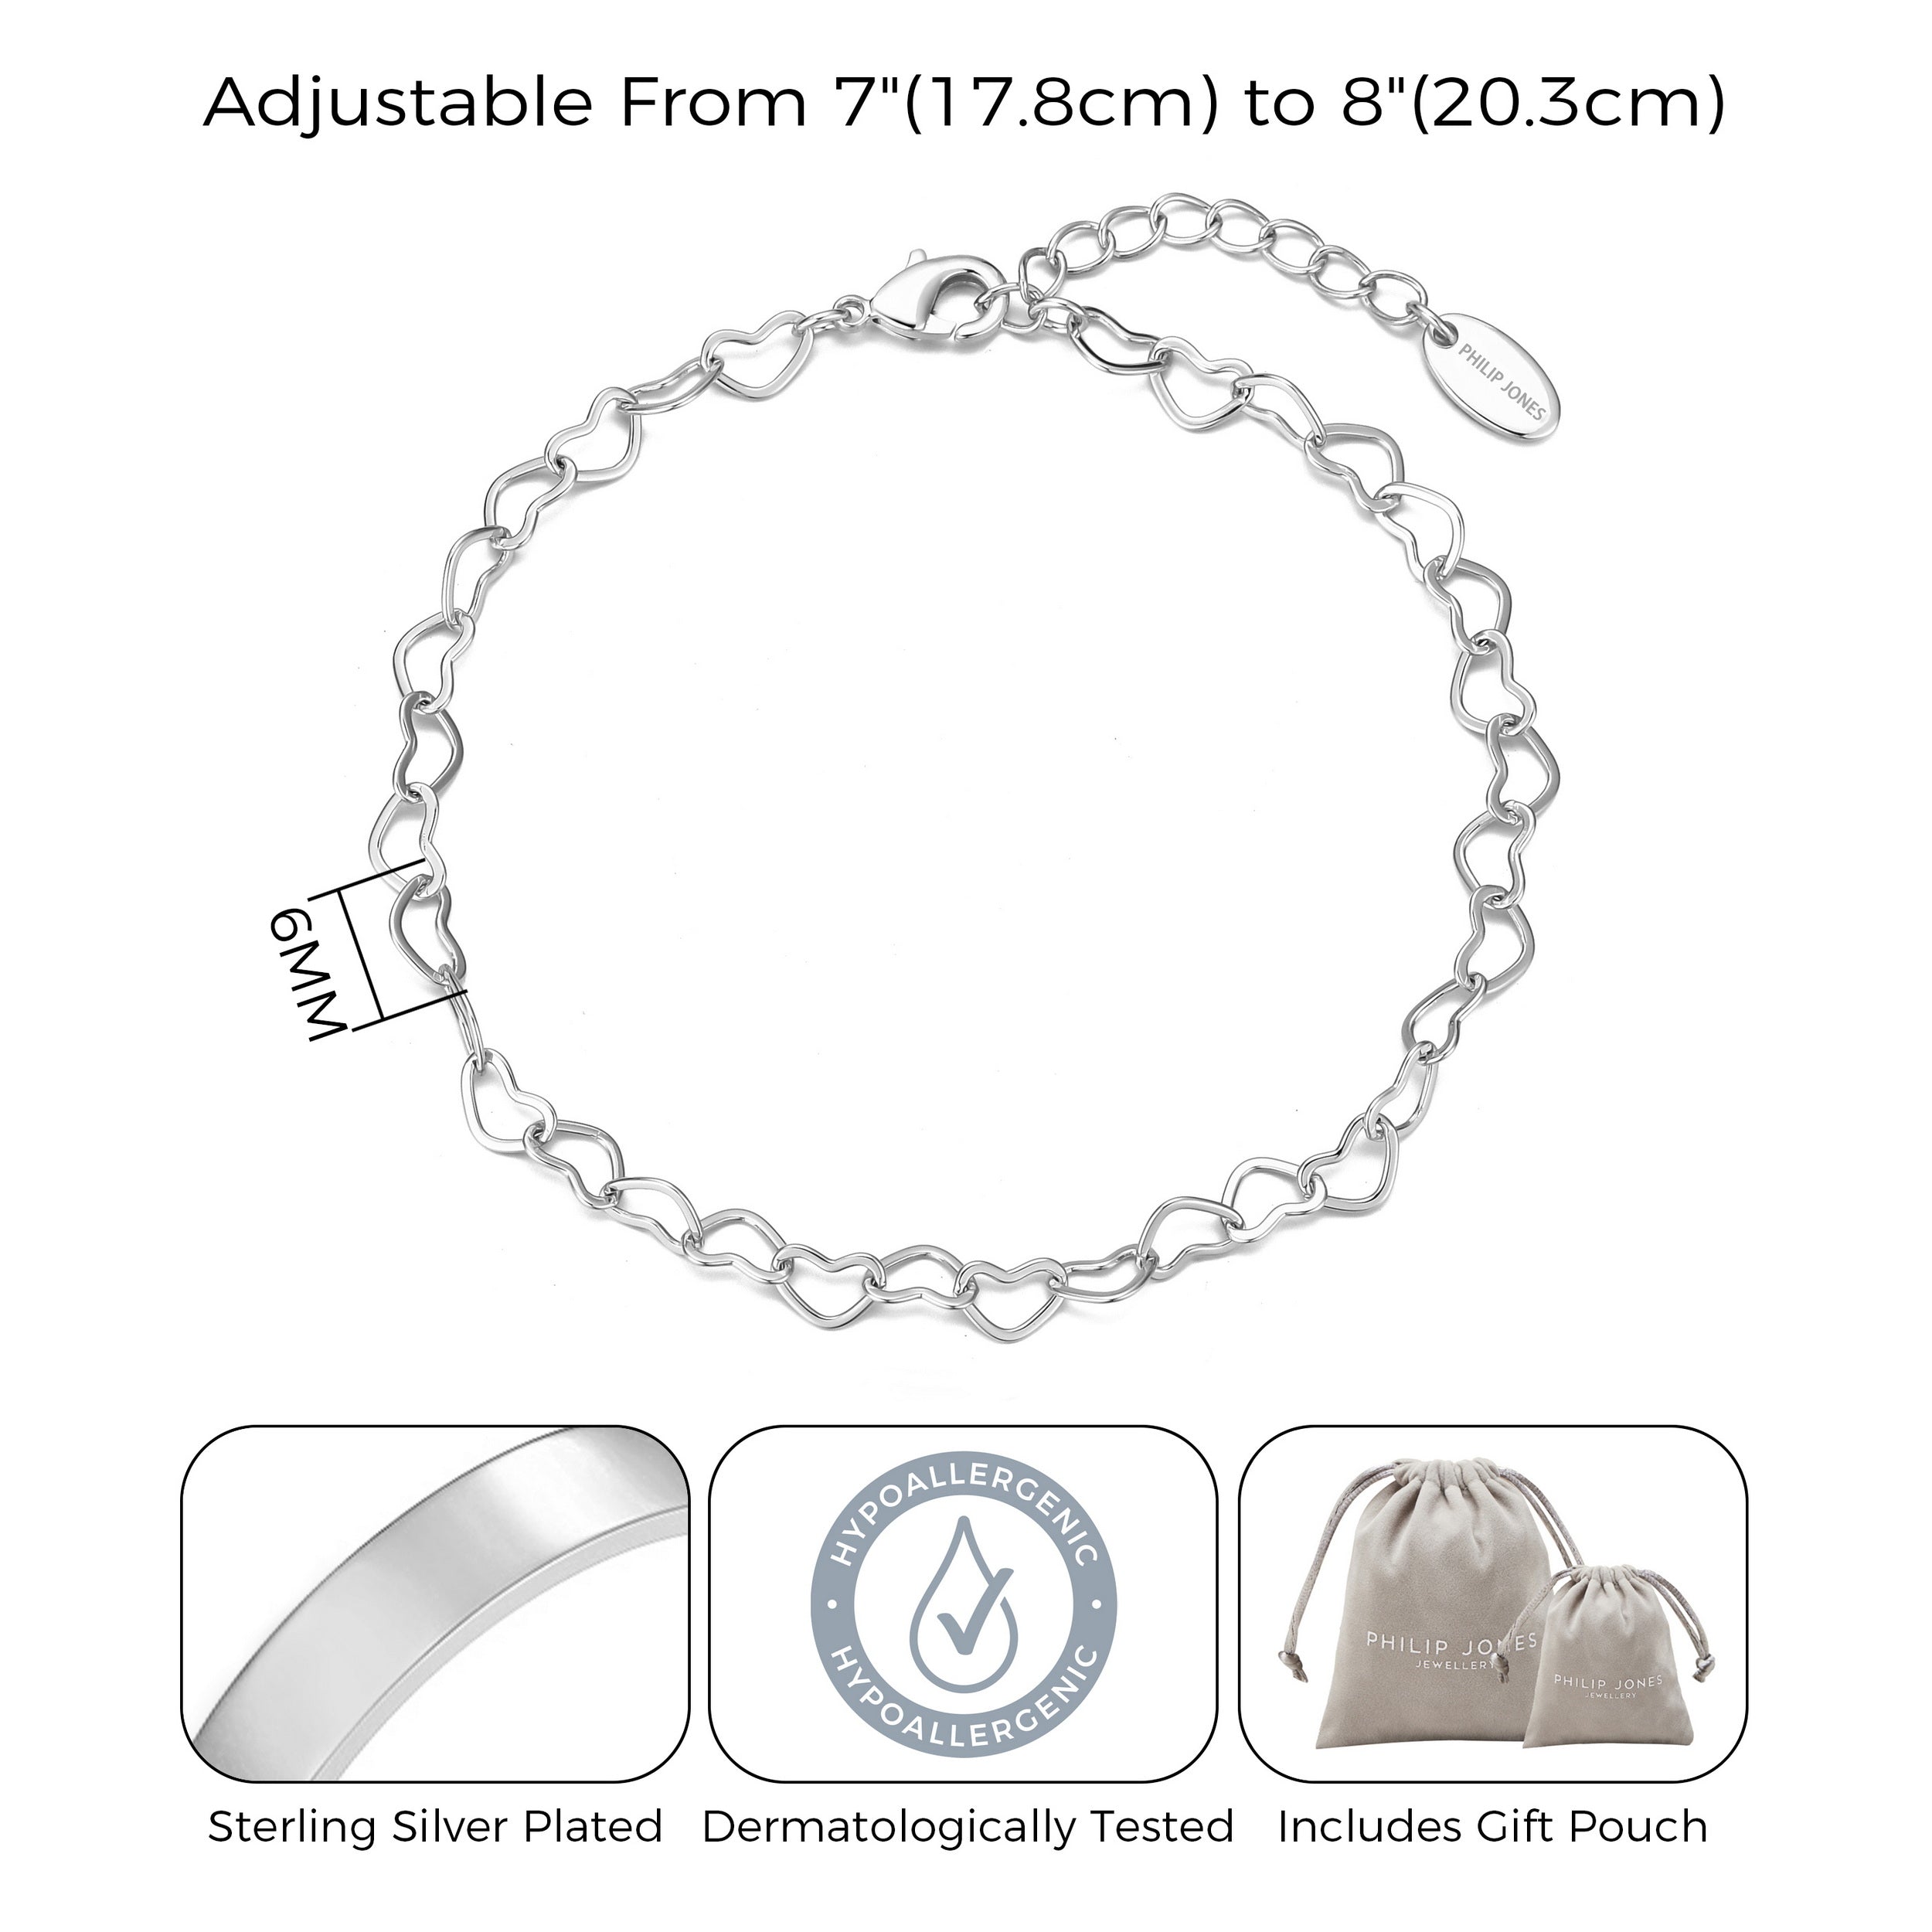 Silver Plated Heart Link Bracelet